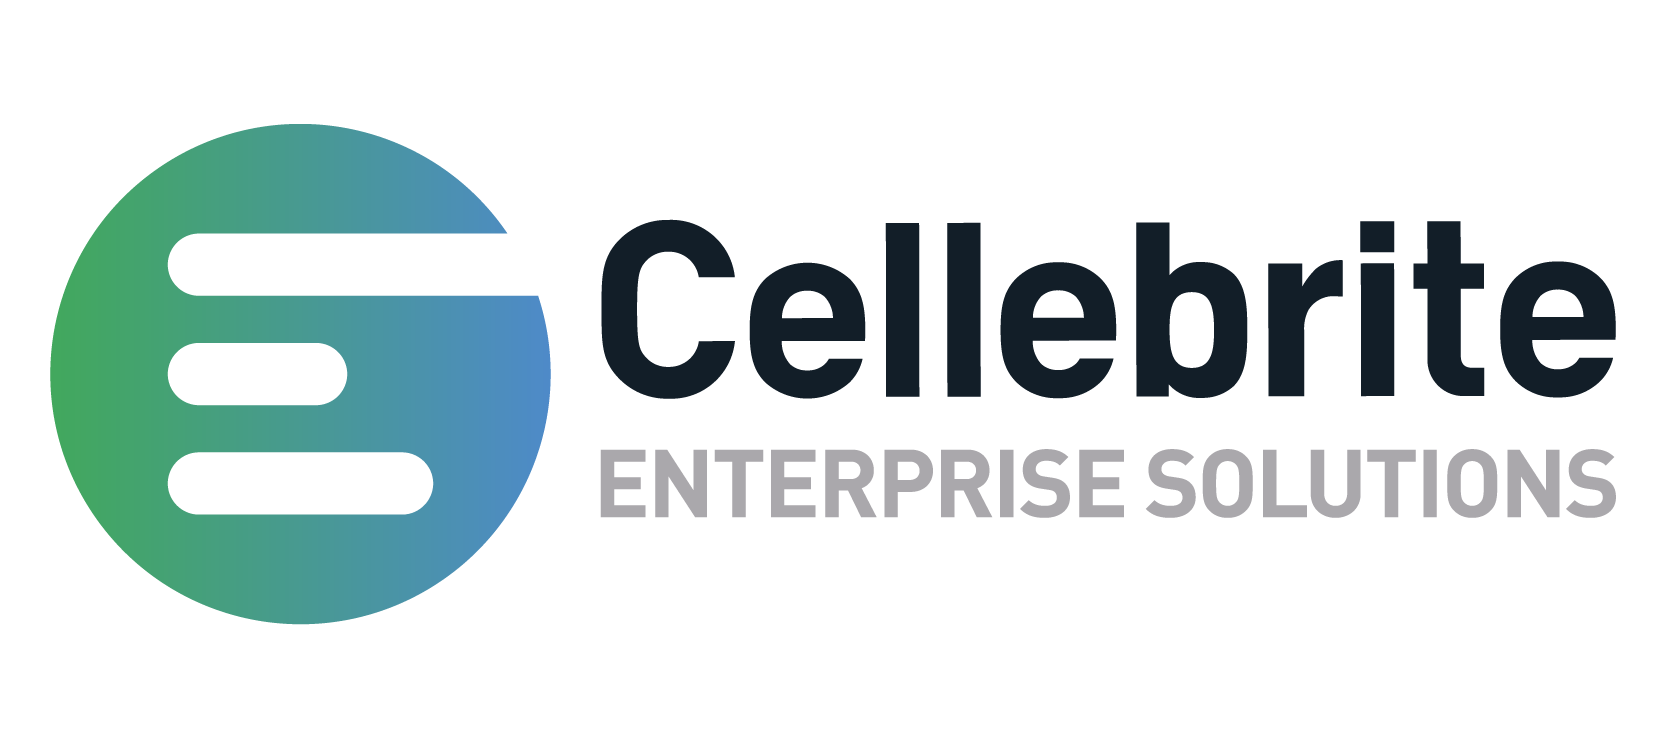 Cellebrite Logo